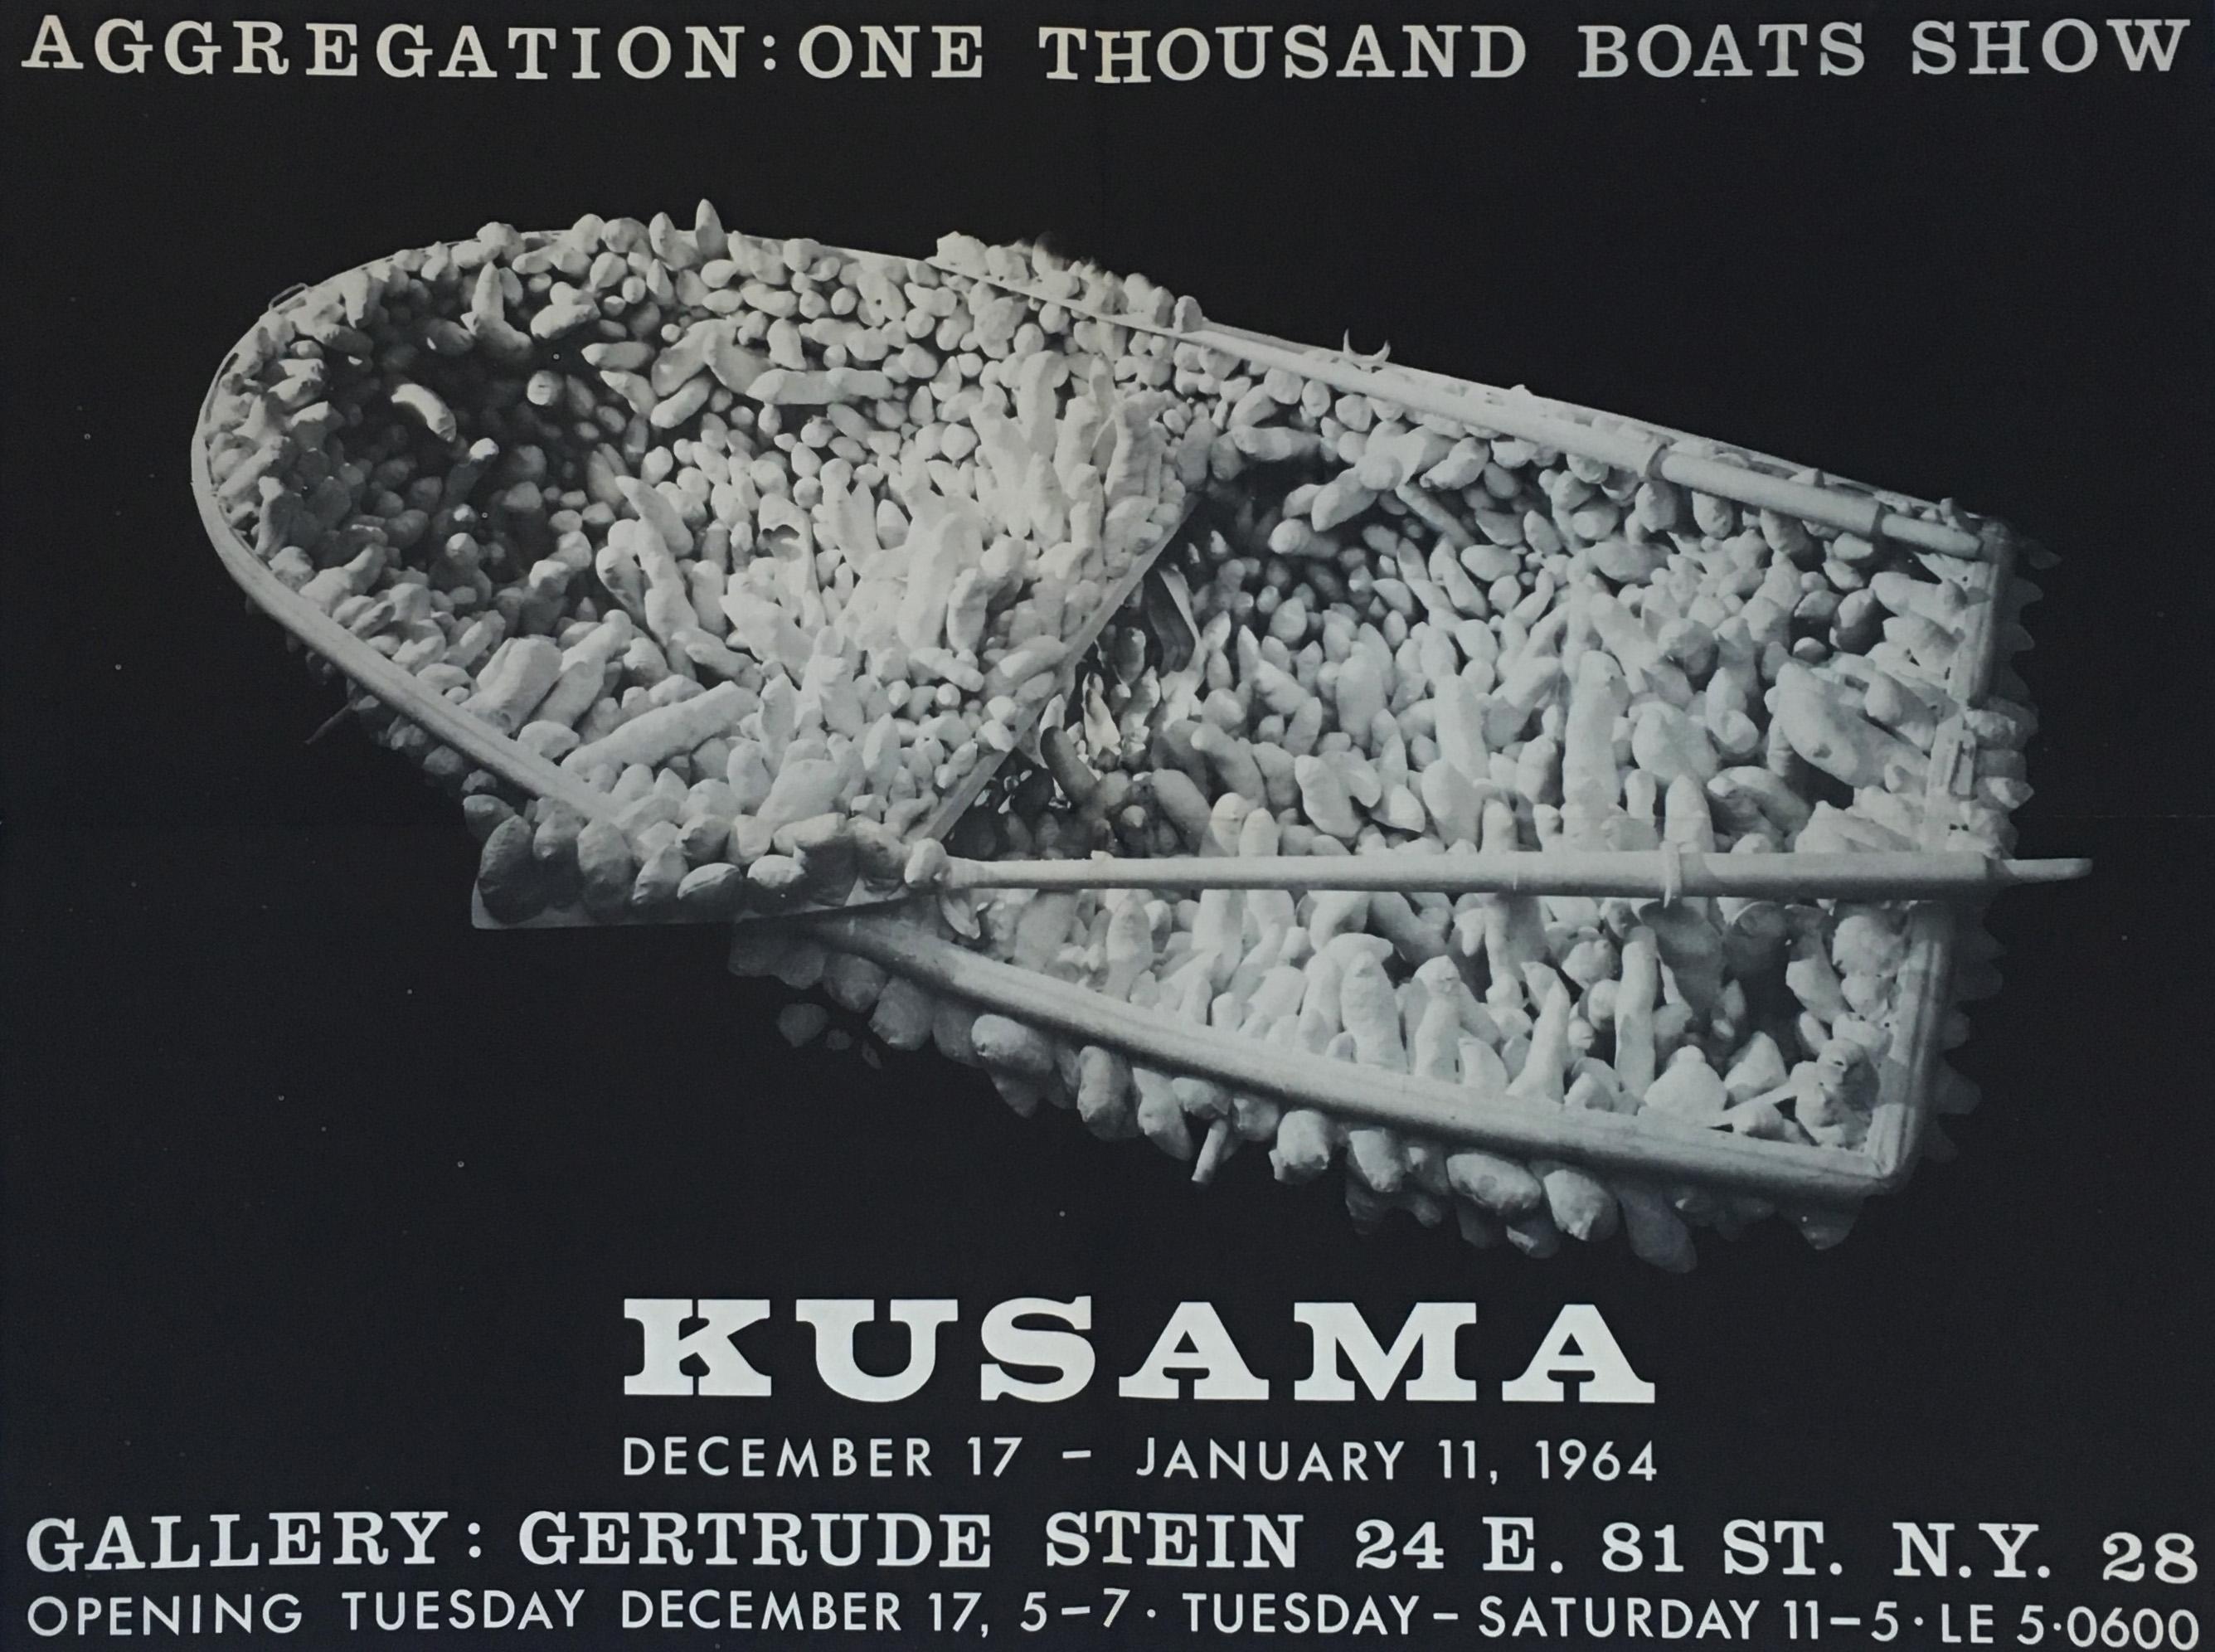 Kusama 1960er Jahre Showplakat „Einhundert Boote Show“ (Kusama Aggregation) – Art von Yayoi Kusama